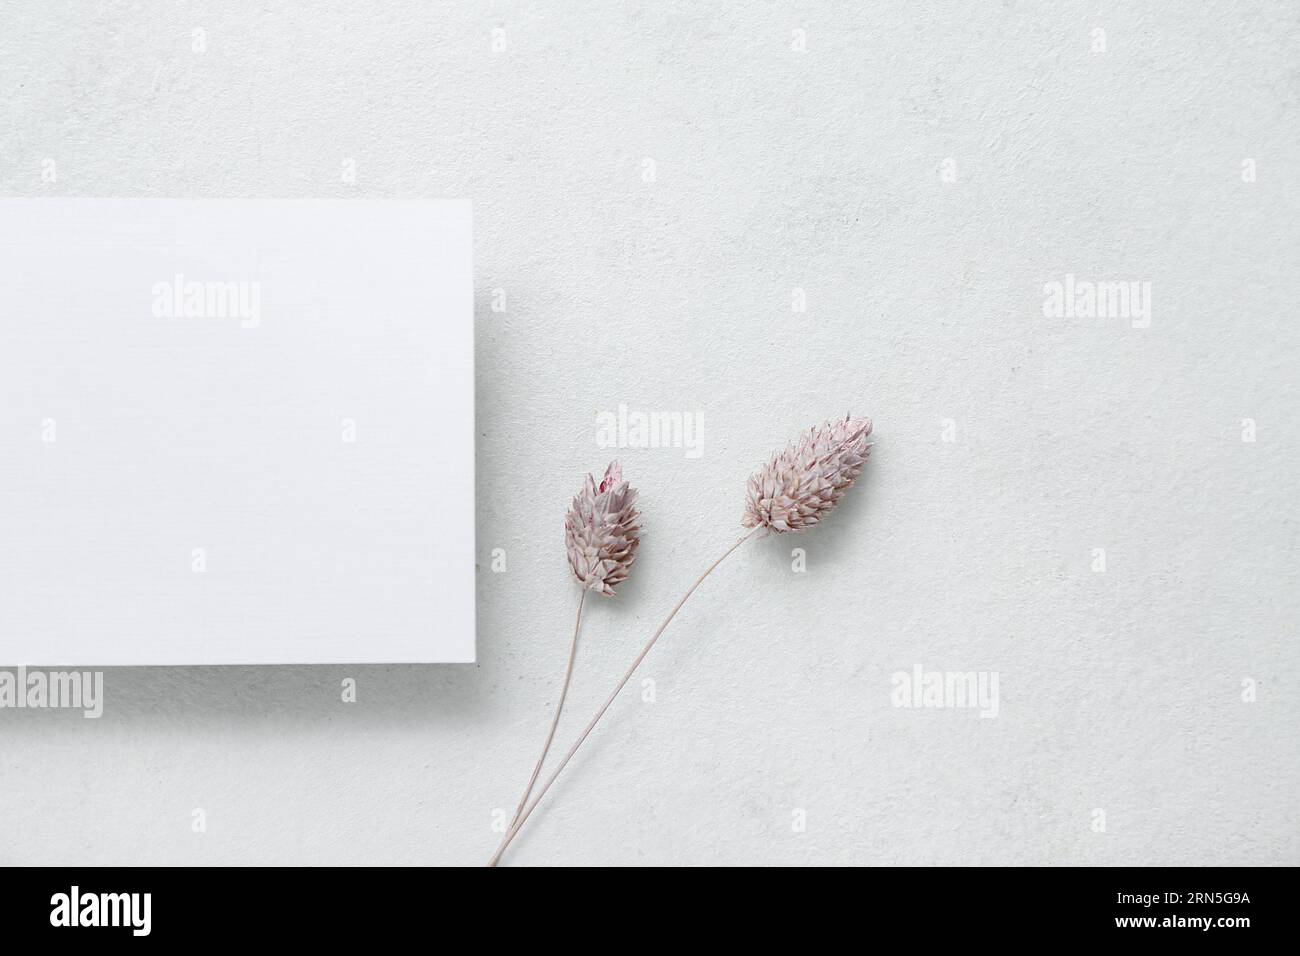 Blank card with dried phalaris on white grunge background Stock Photo